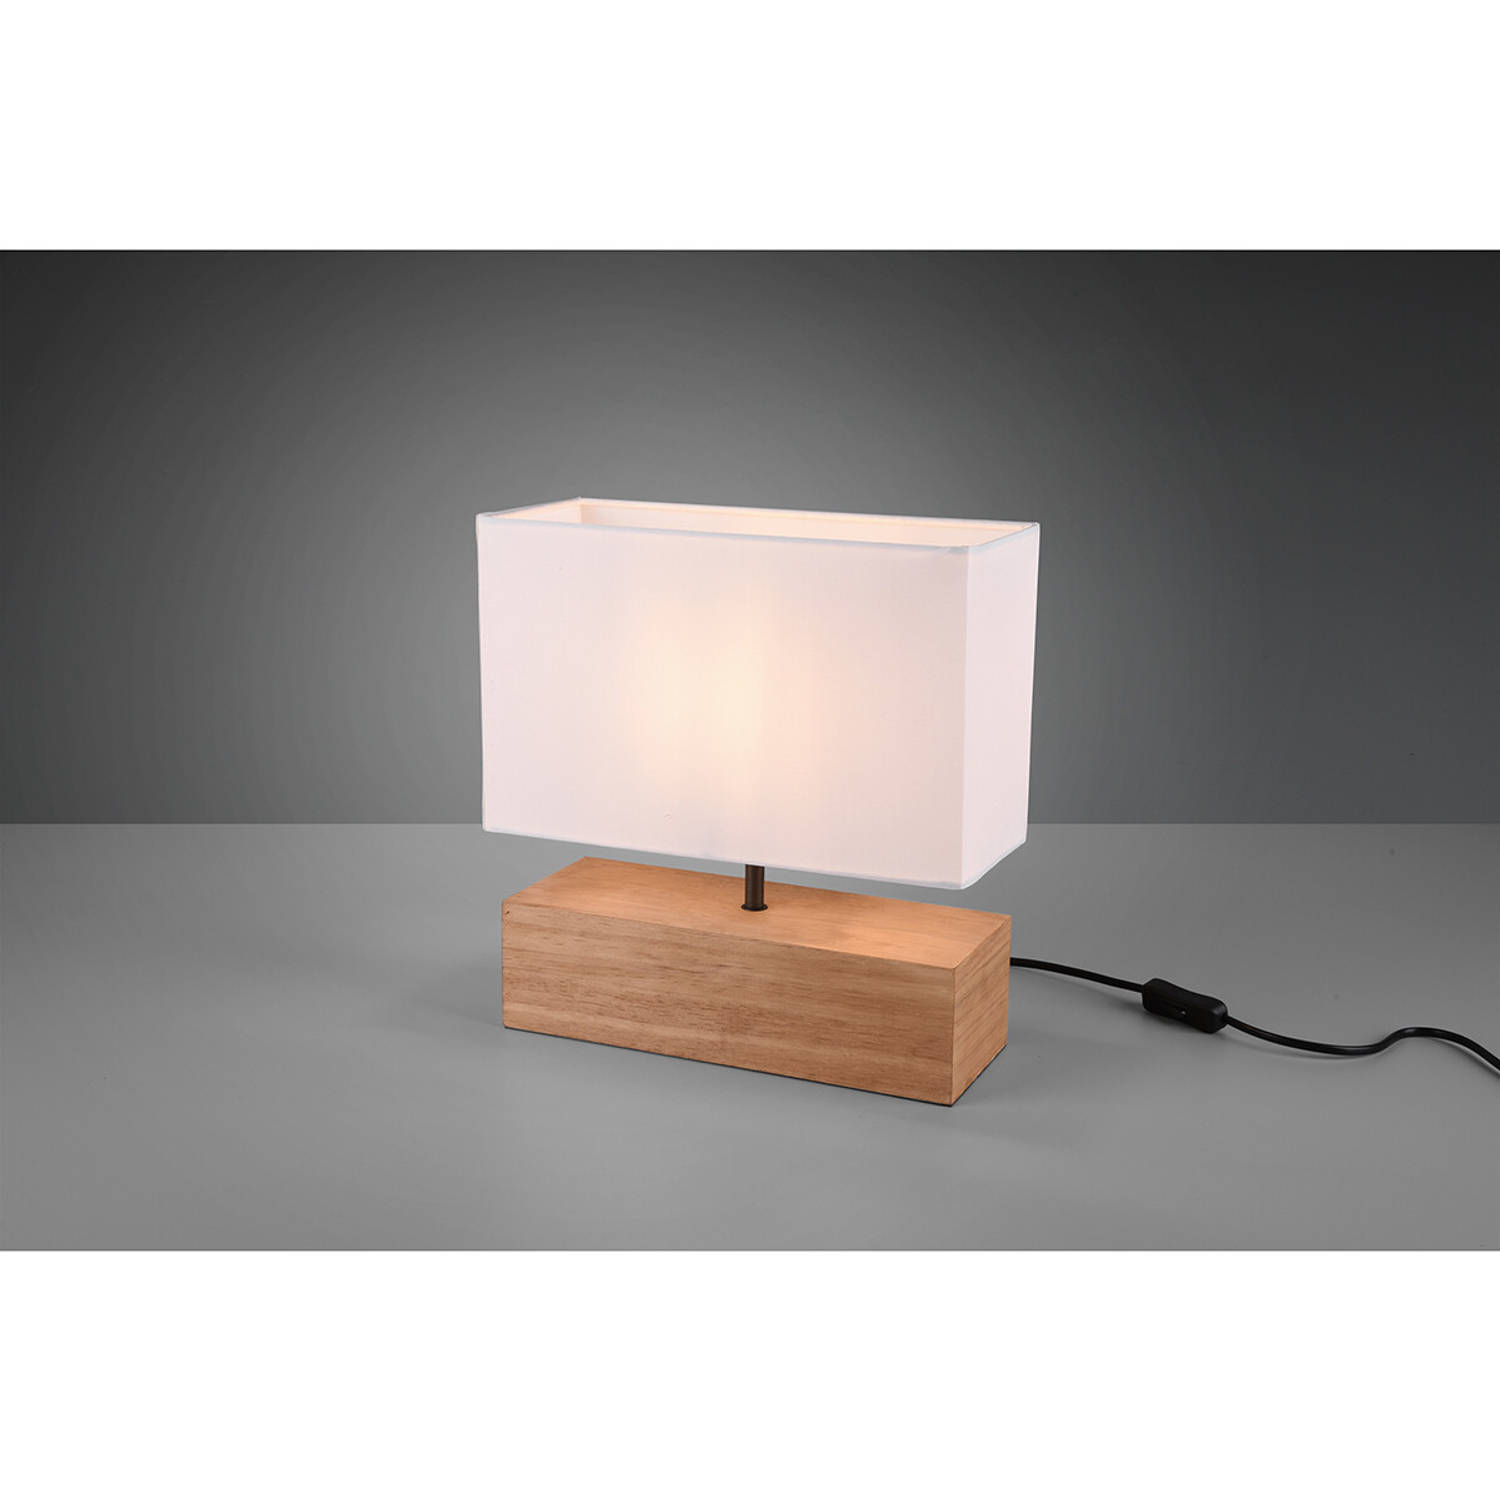 Terminal voorbeeld Afleiden LED Tafellamp - Tafelverlichting - Trion Wooden - E27 Fitting - Rechthoek -  Mat Wit - Hout | Blokker